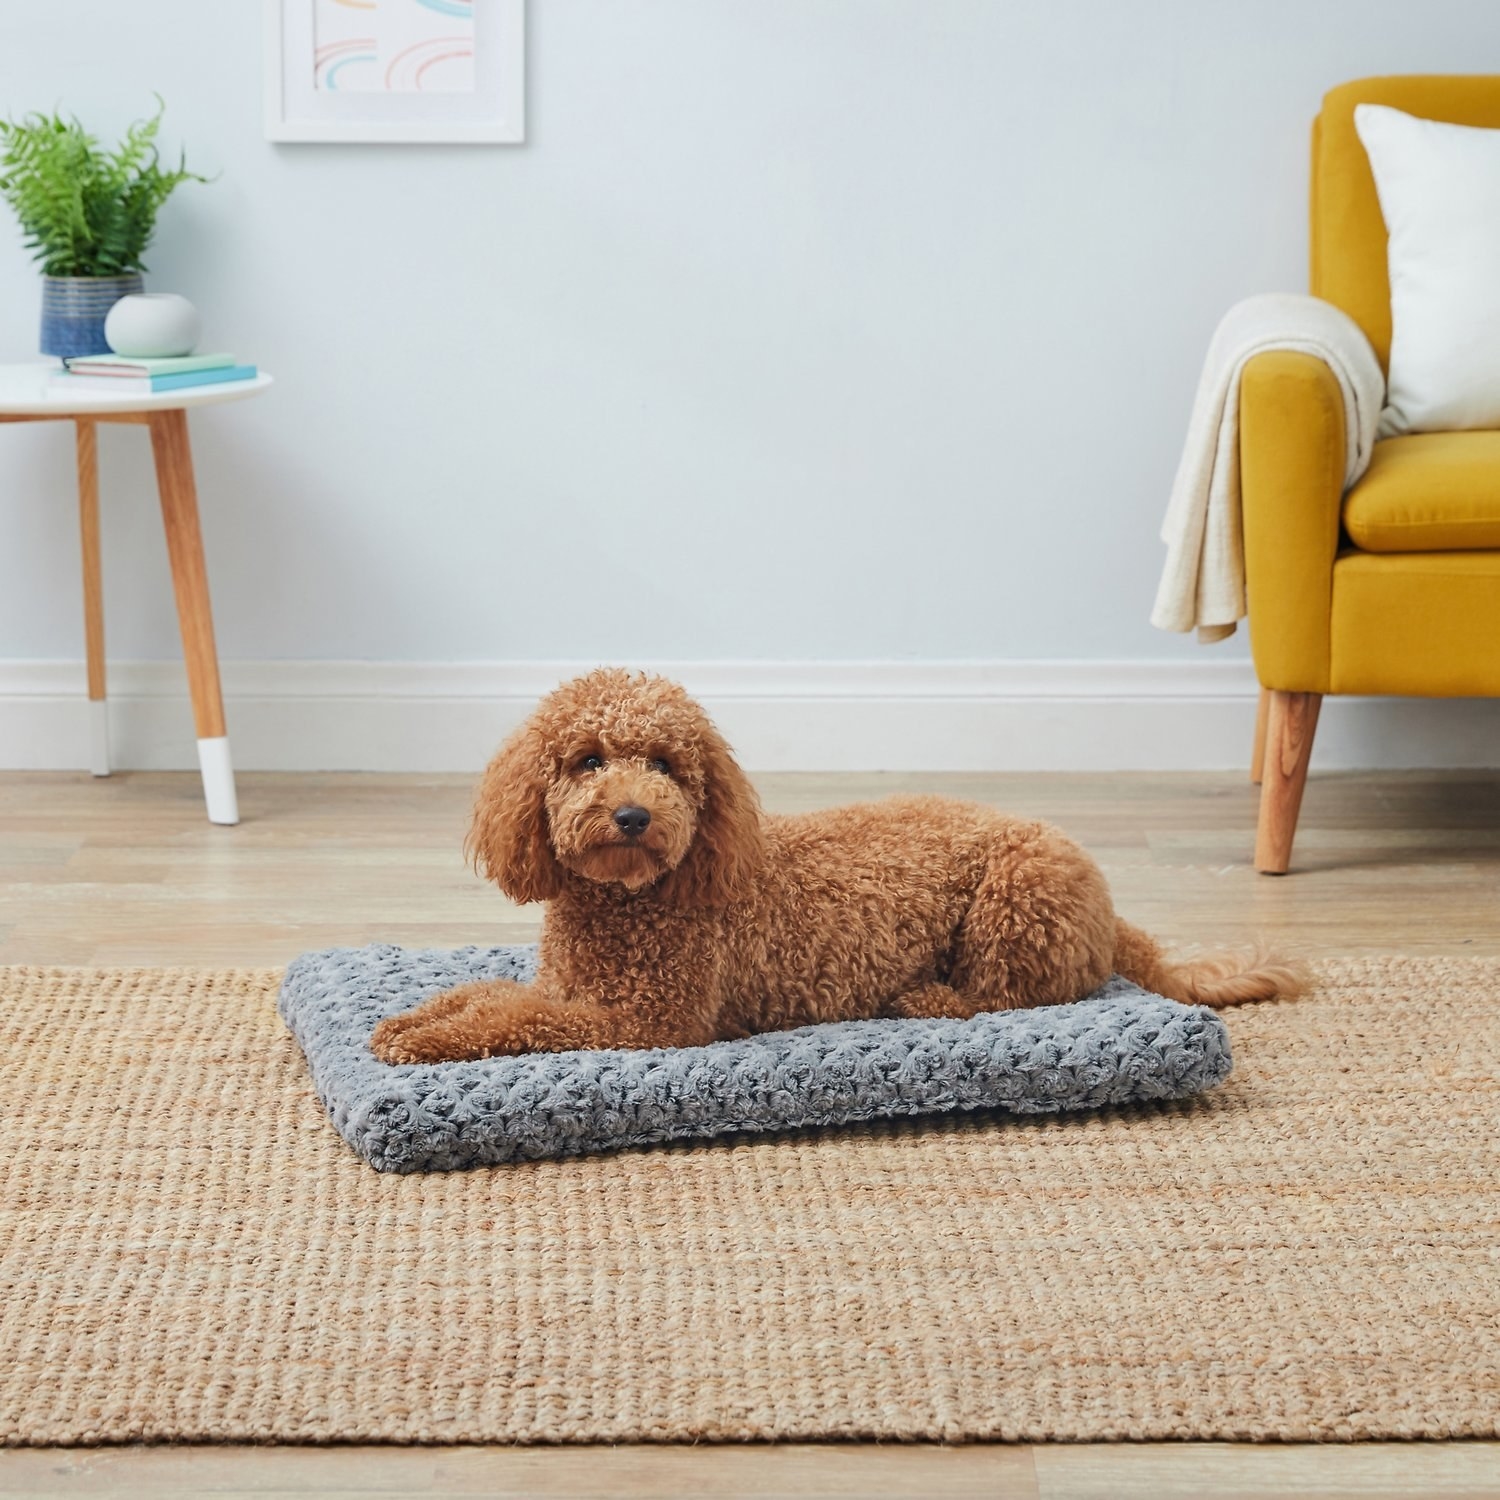 dog sitting on the mat